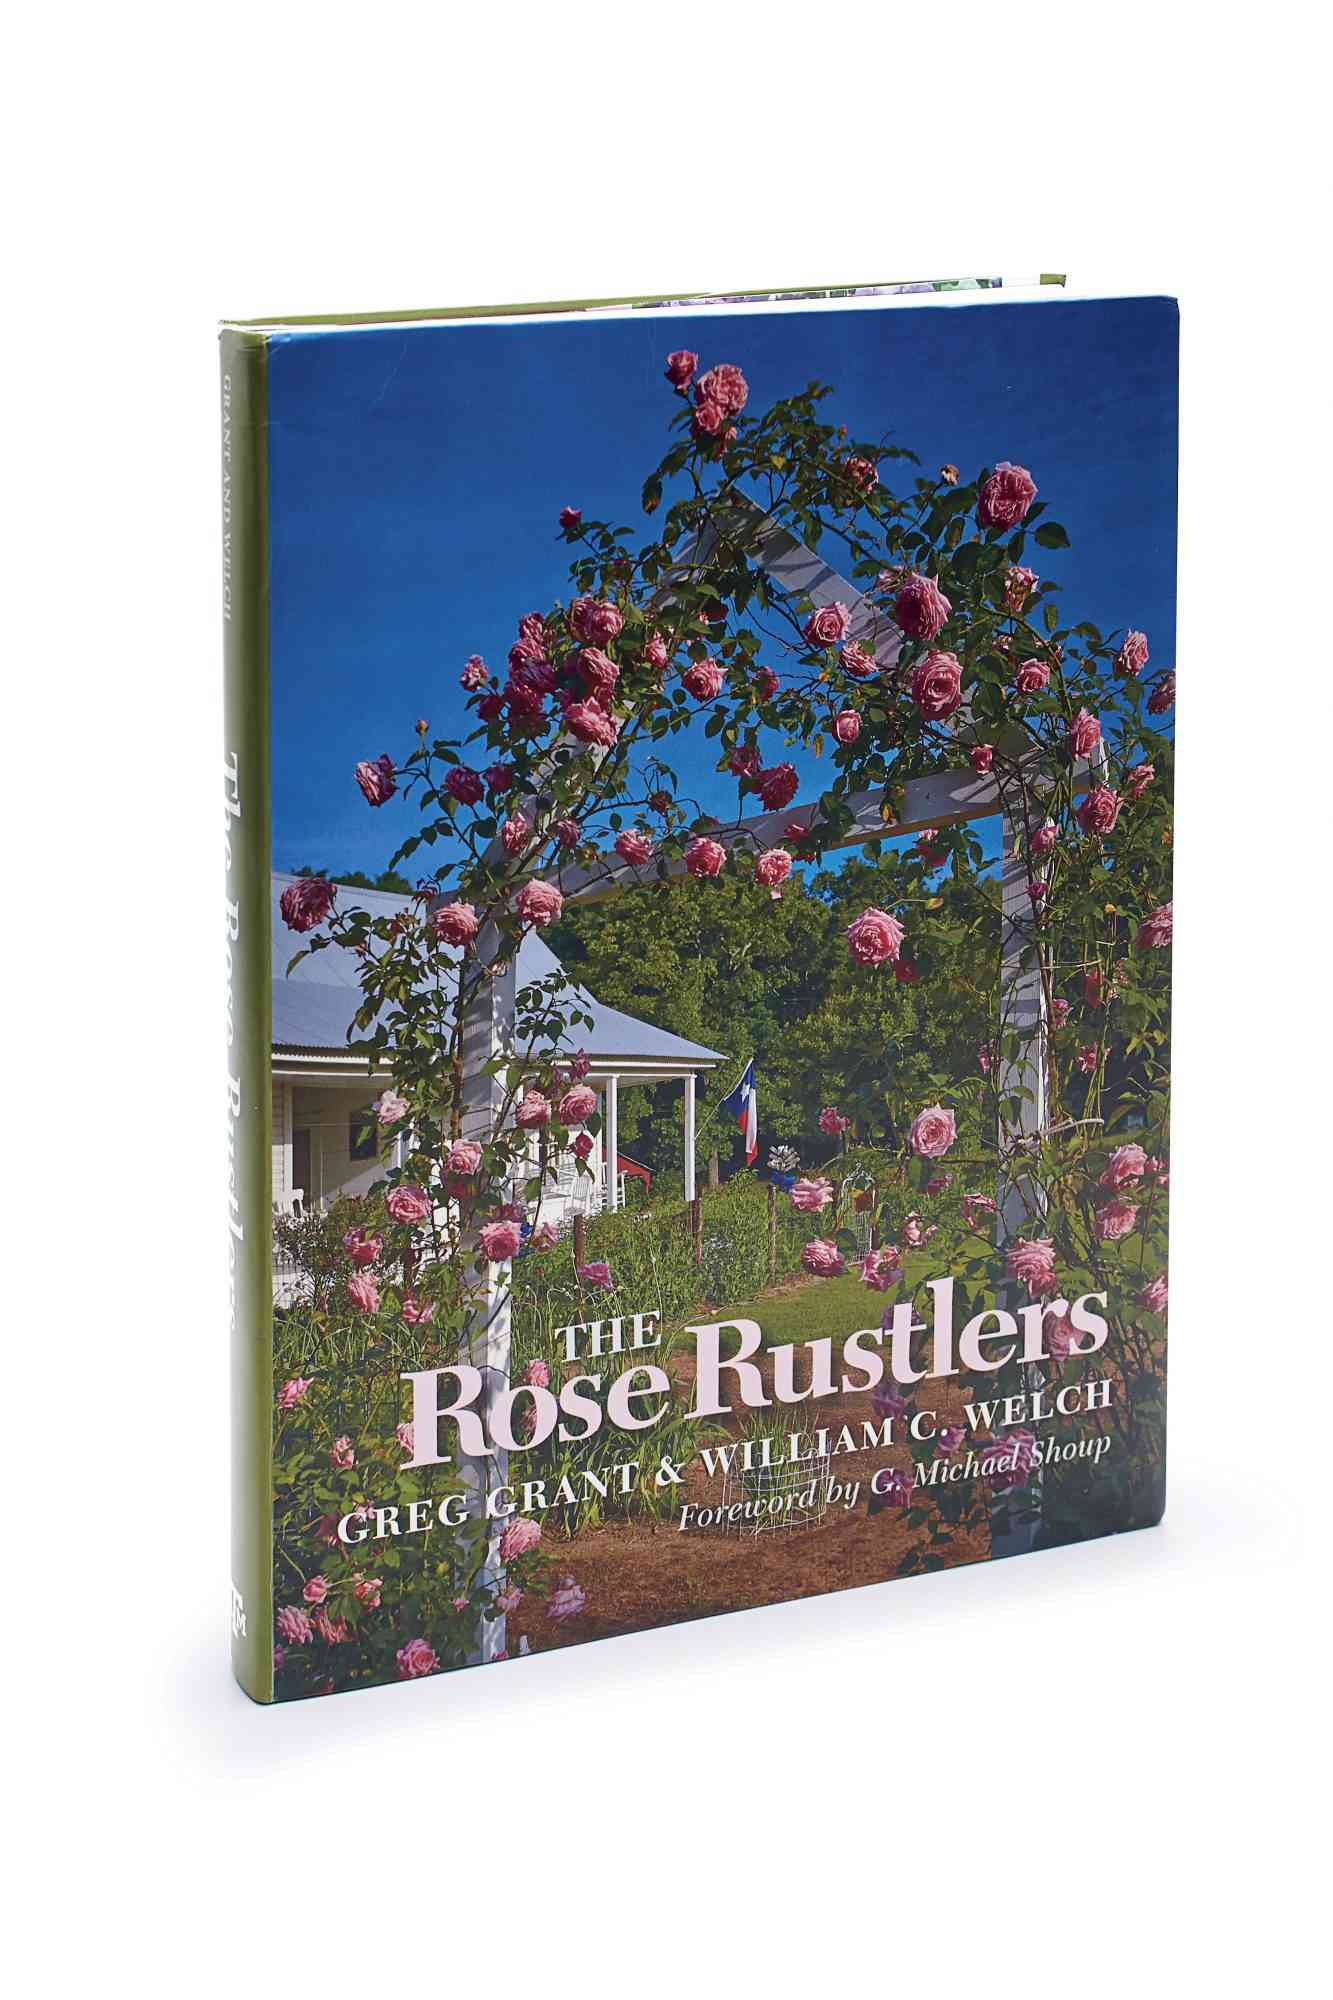 The Rose Rustlers Book